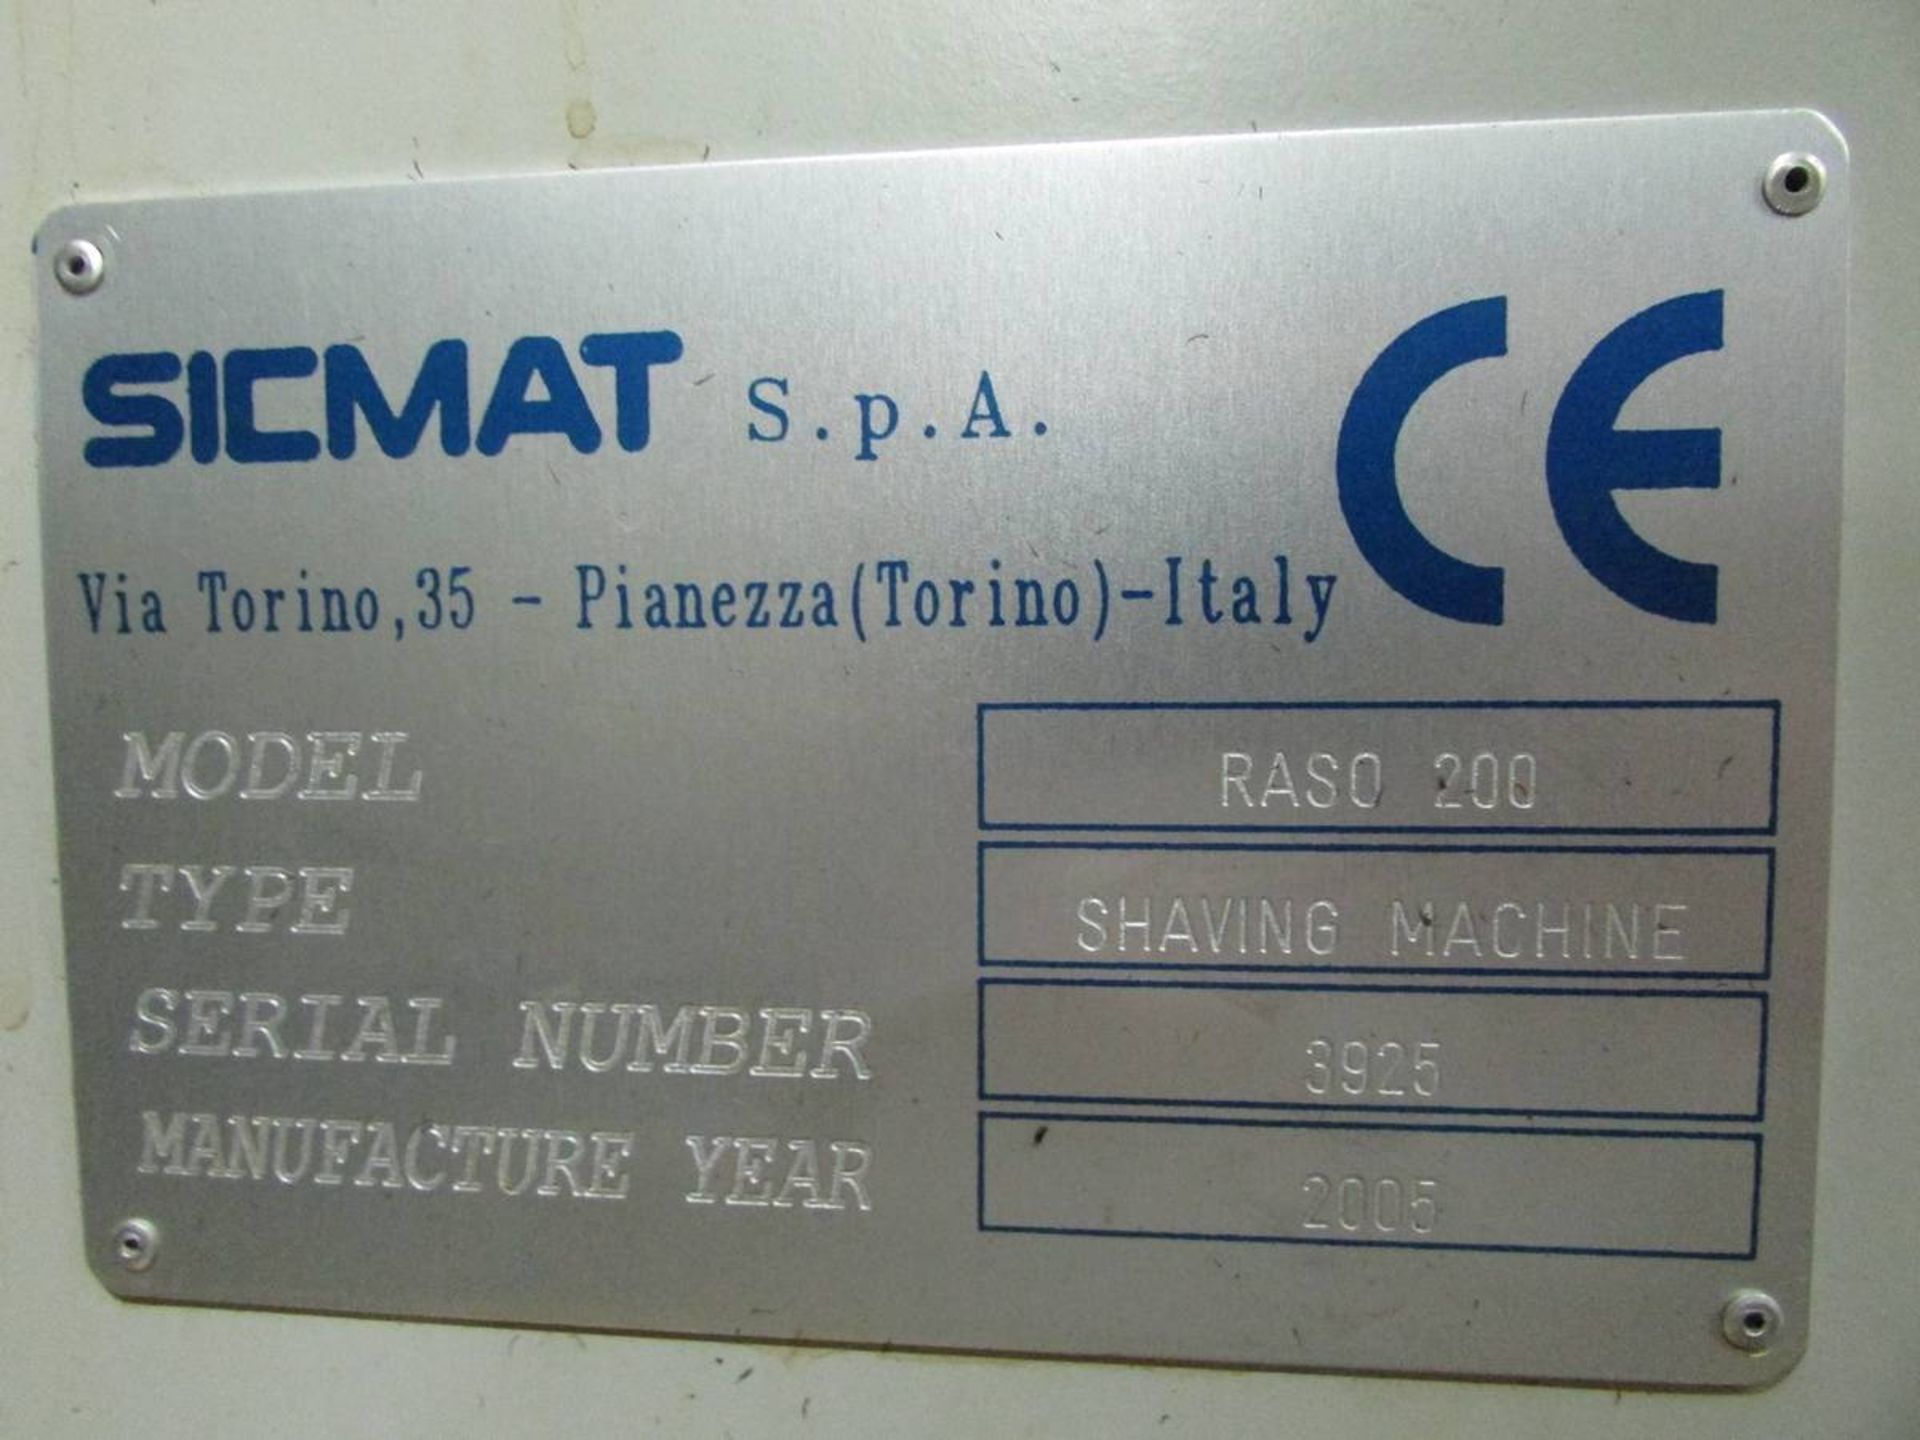 2005 Sicmat RASO 200 5 AX CNC Gear Shaving Machine - Image 14 of 14